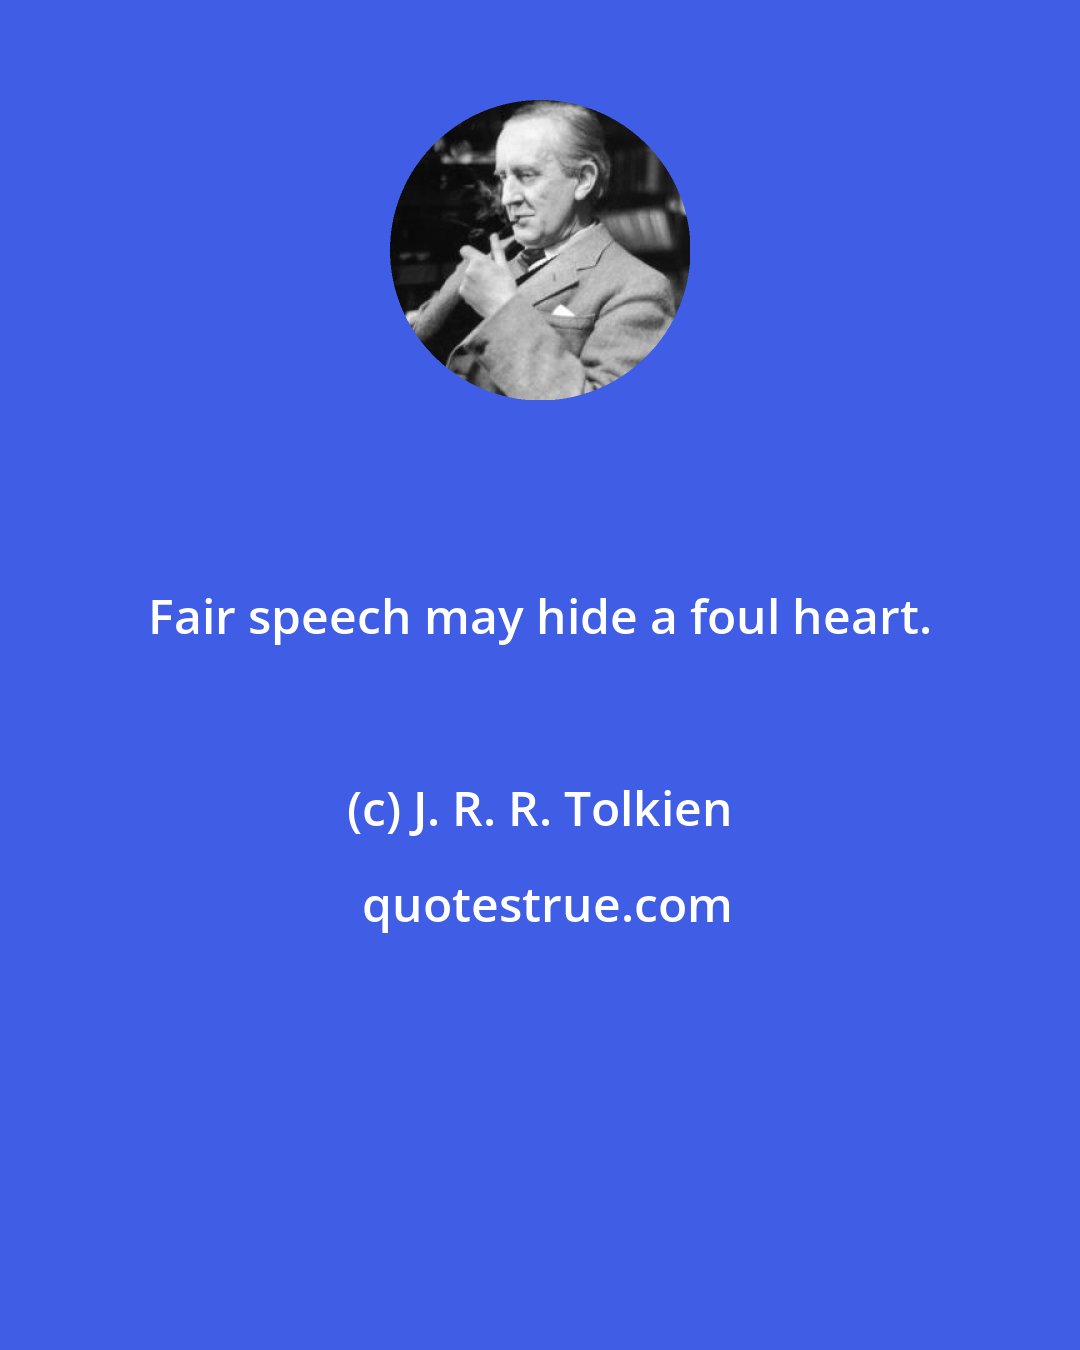 J. R. R. Tolkien: Fair speech may hide a foul heart.